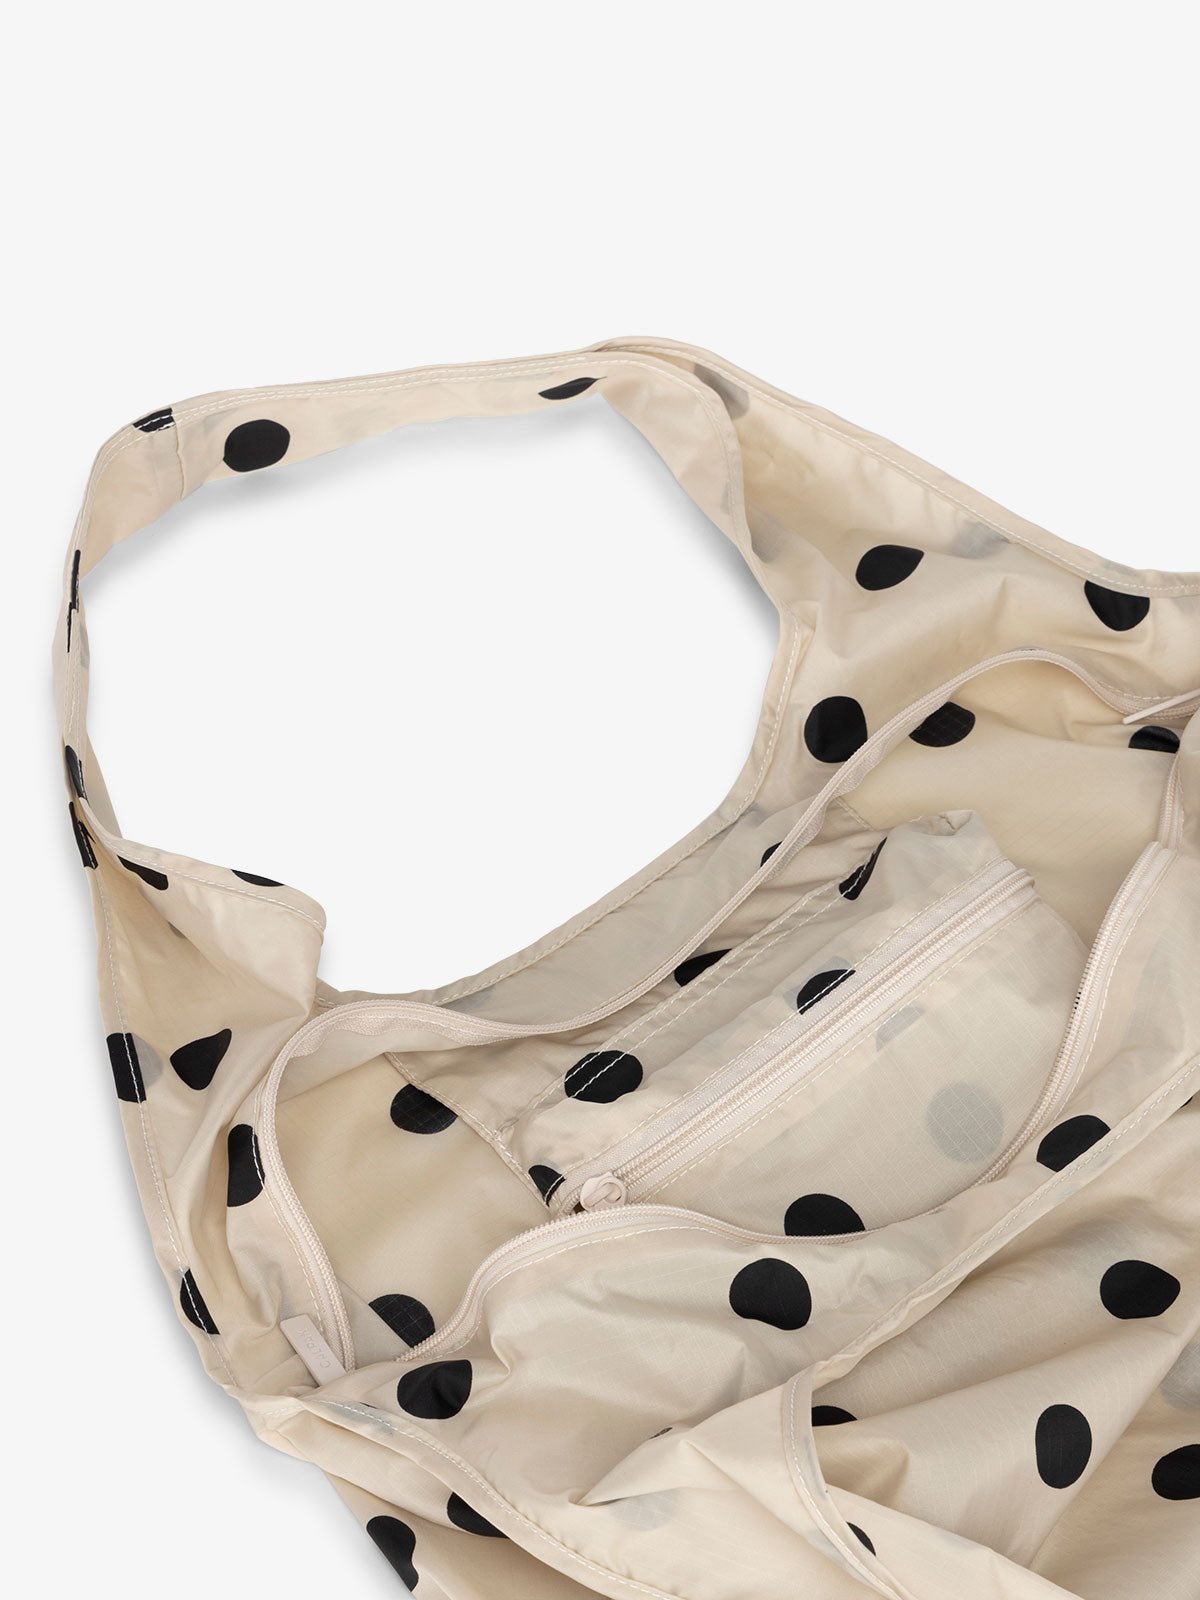 Nylon lightweight tote bag for grocery shopping in polka dot print